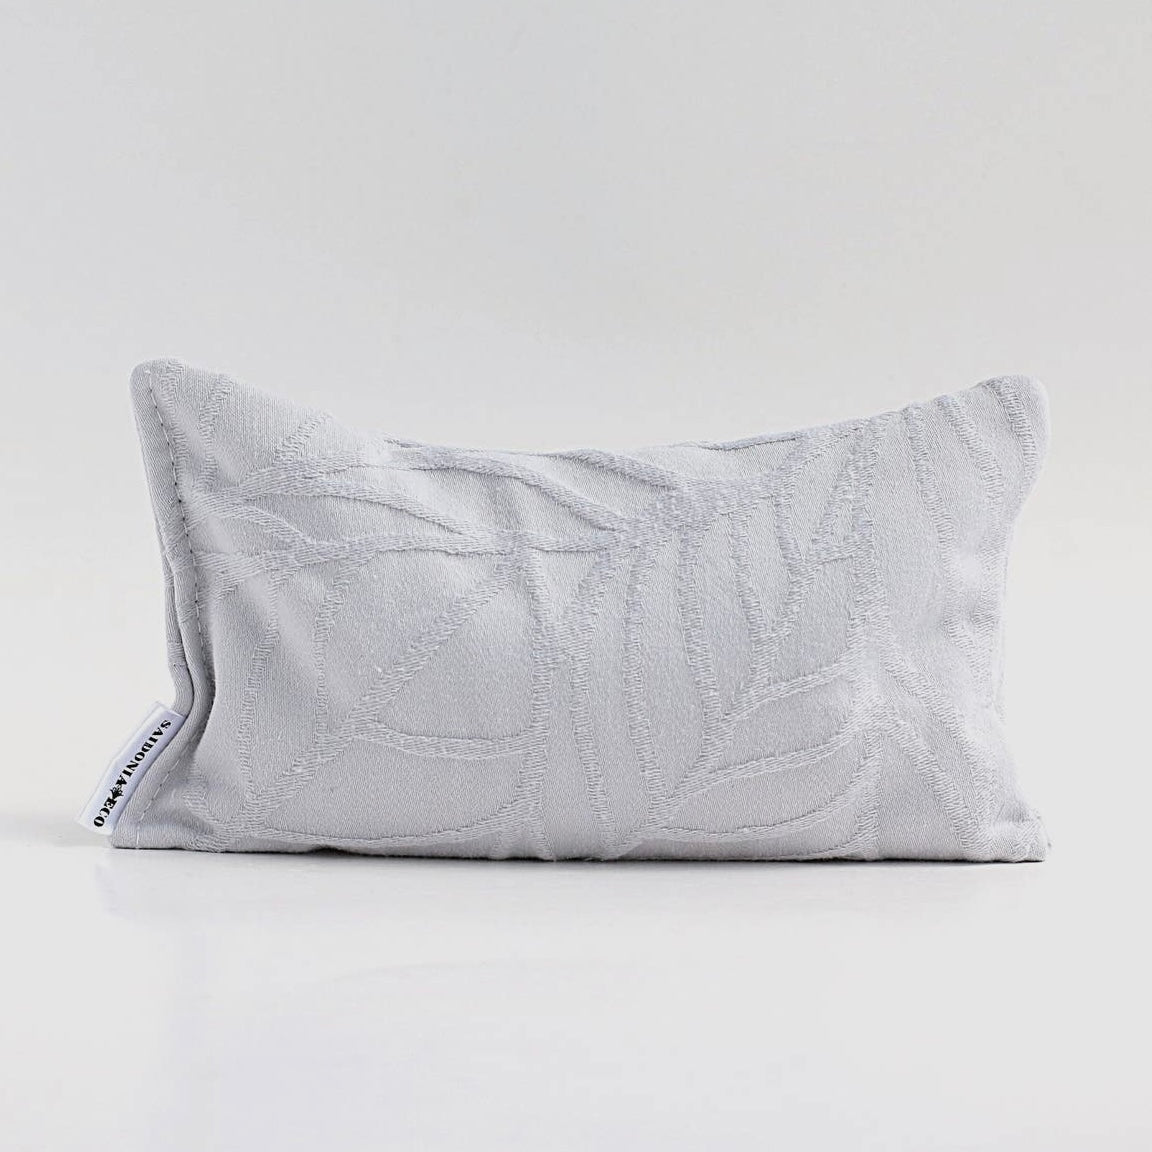 Aromatic Eye Pillows